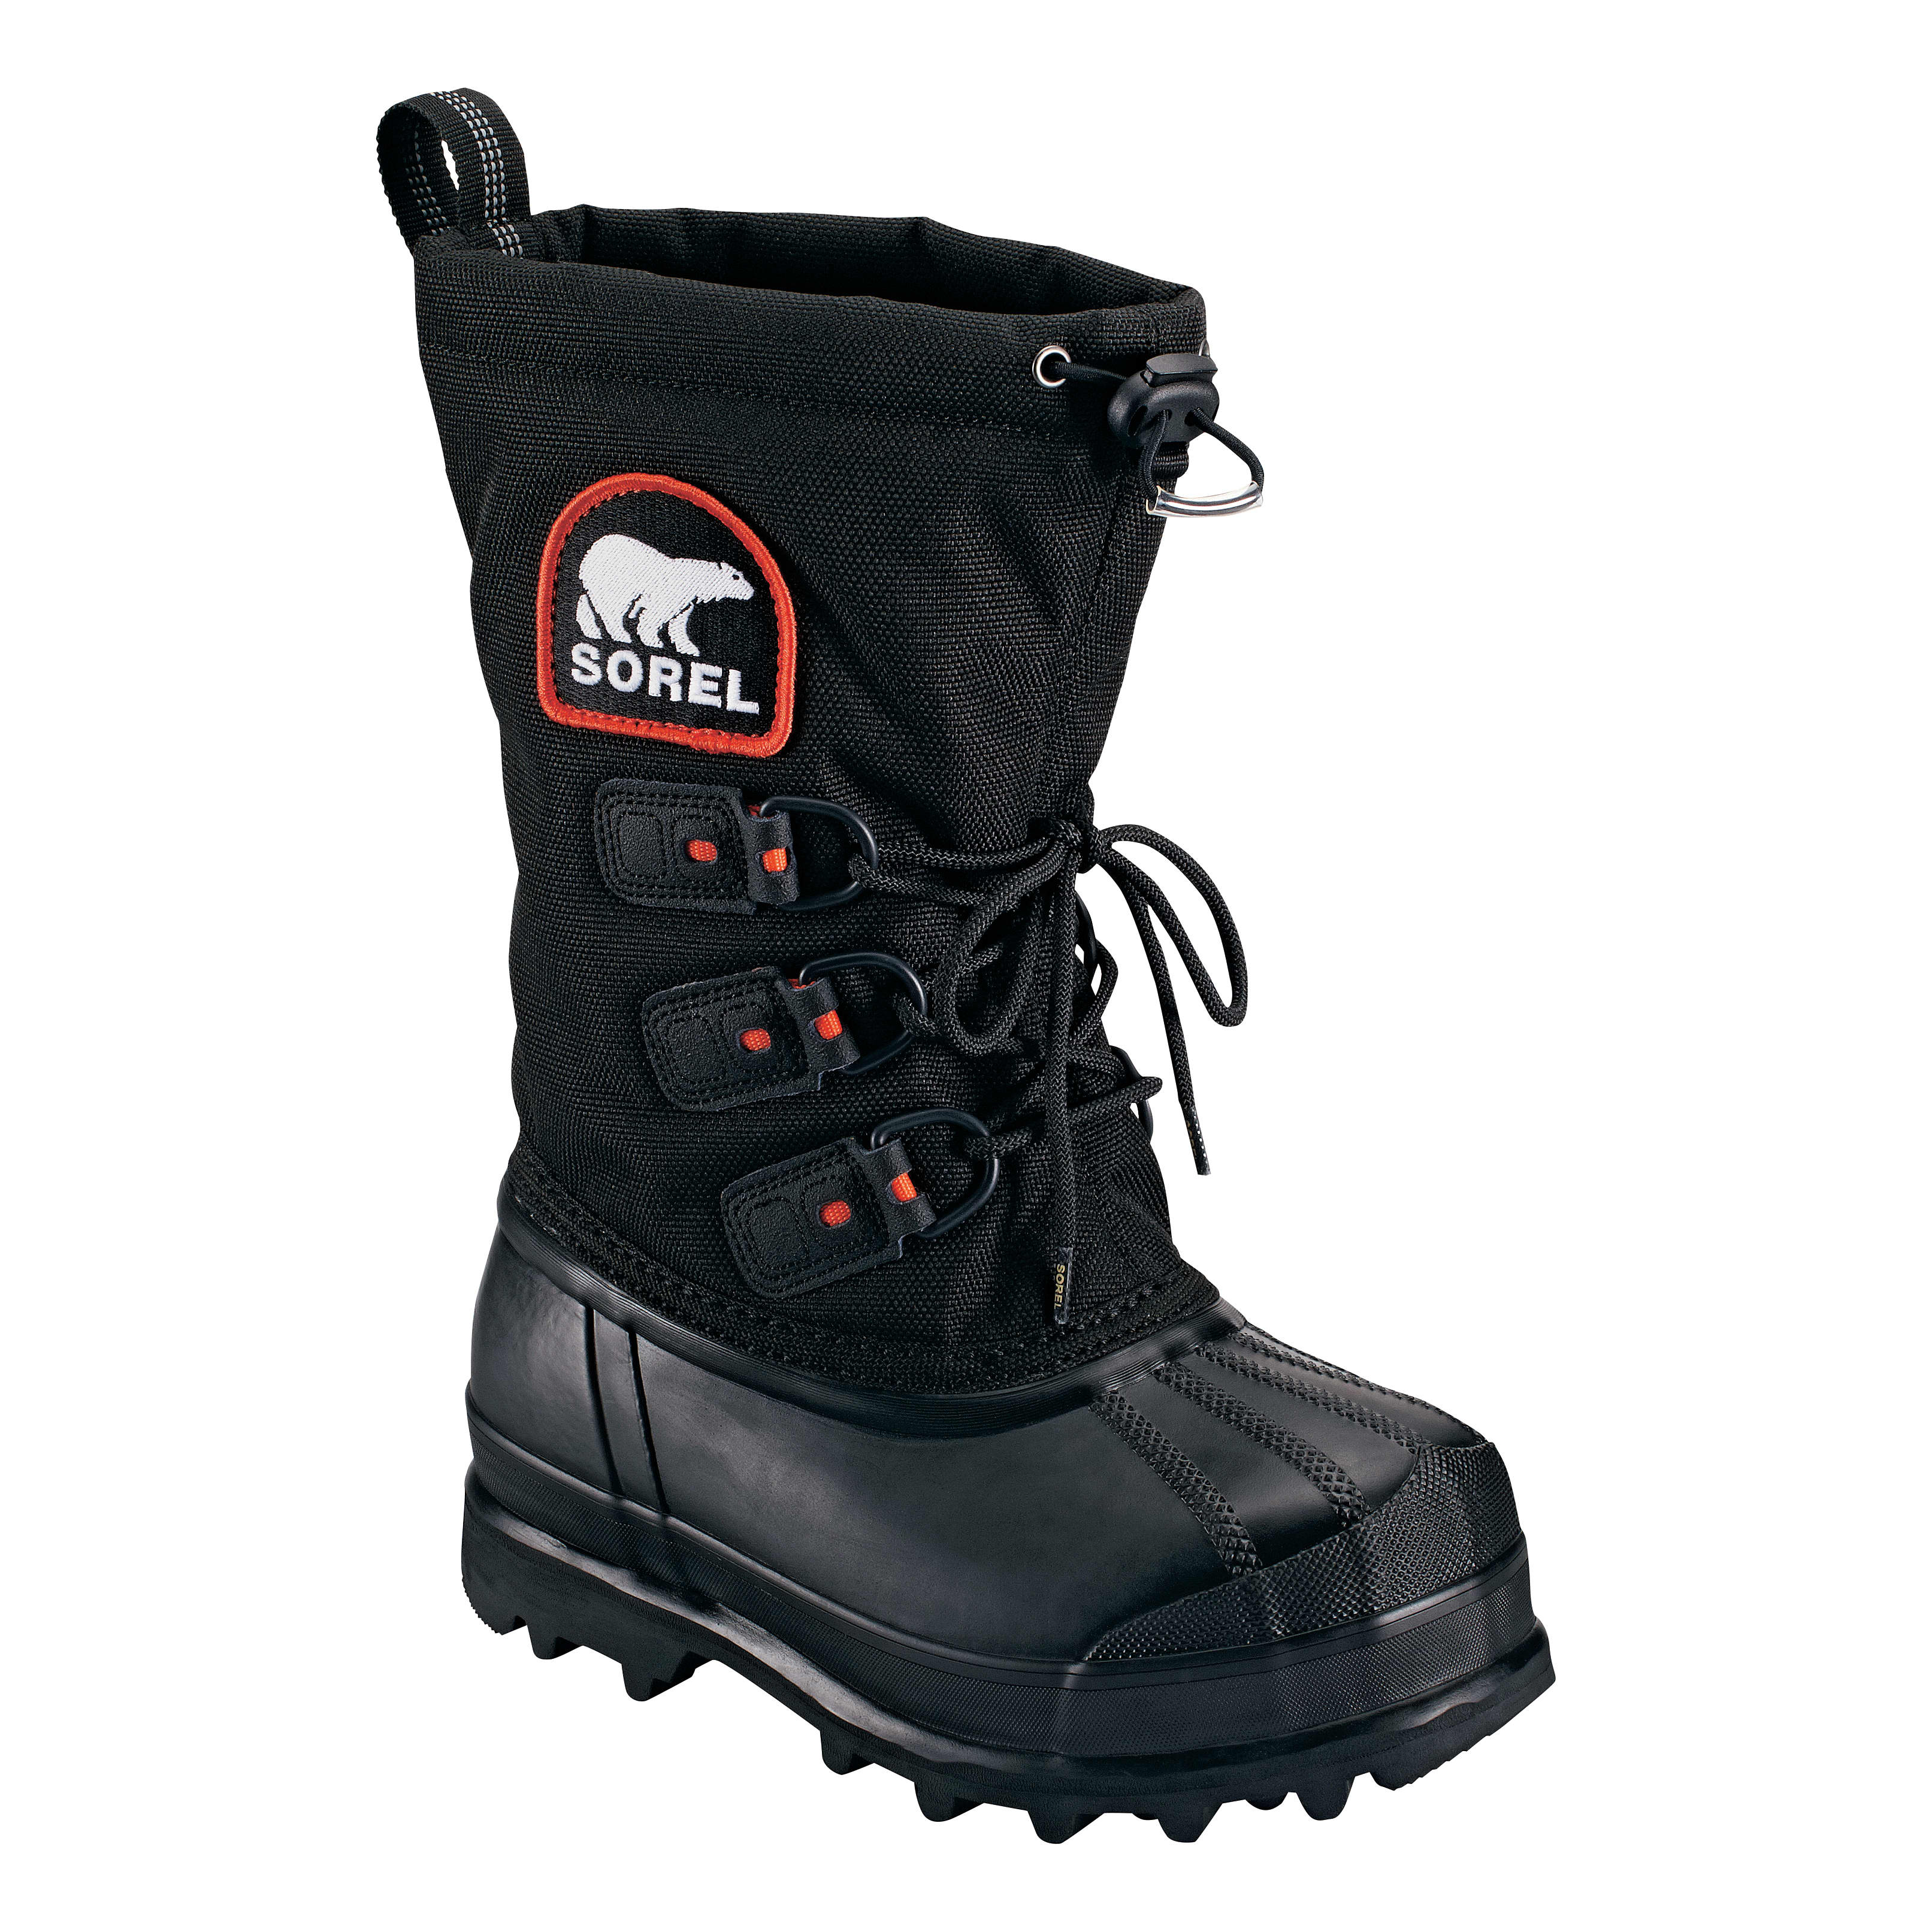 Sorel Youth Glacier XT Boots